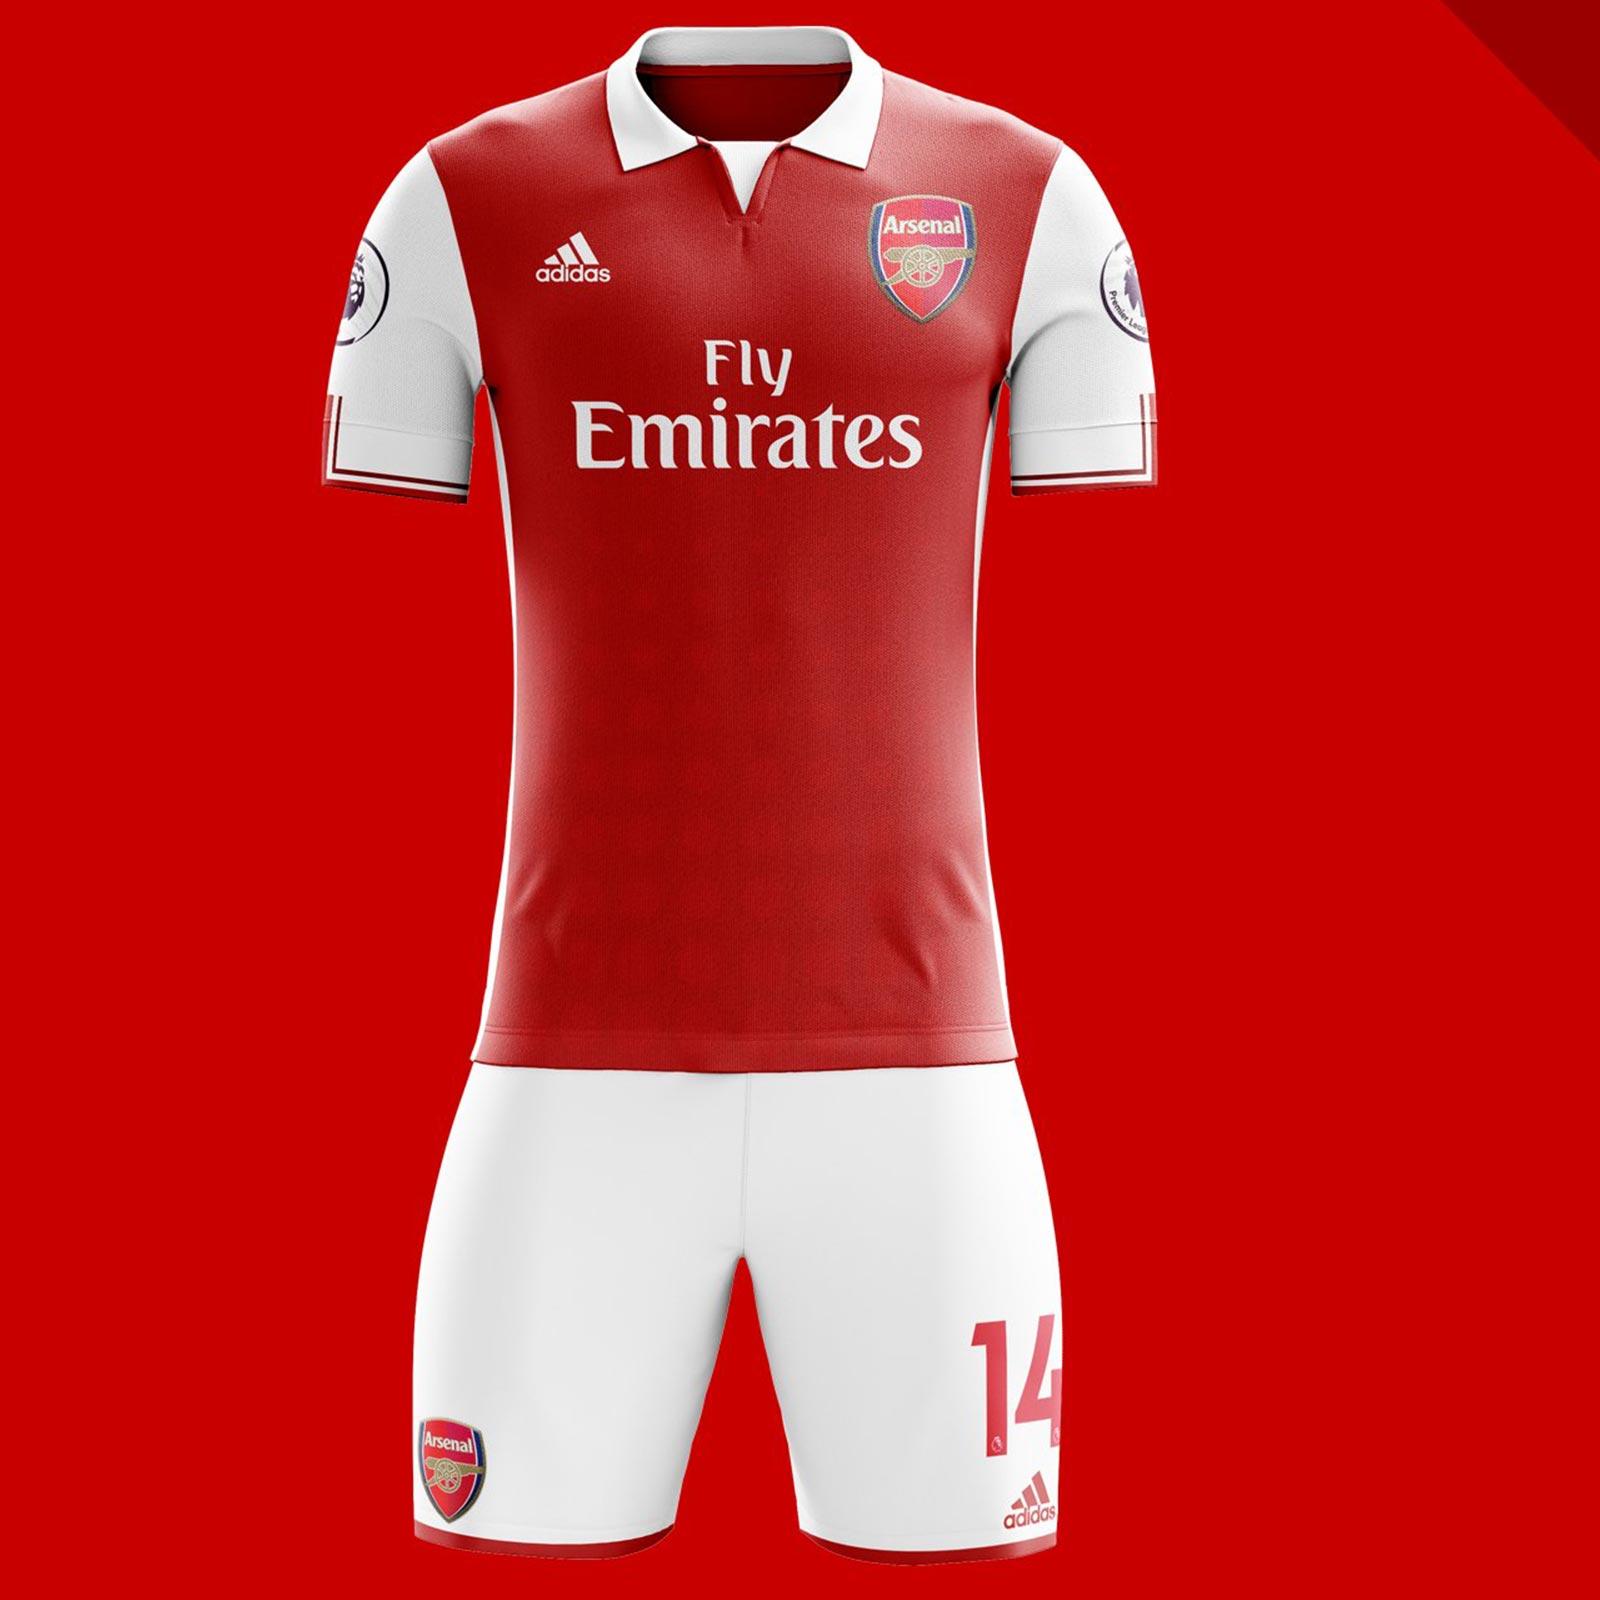 arsenal new shirt 2019 2020